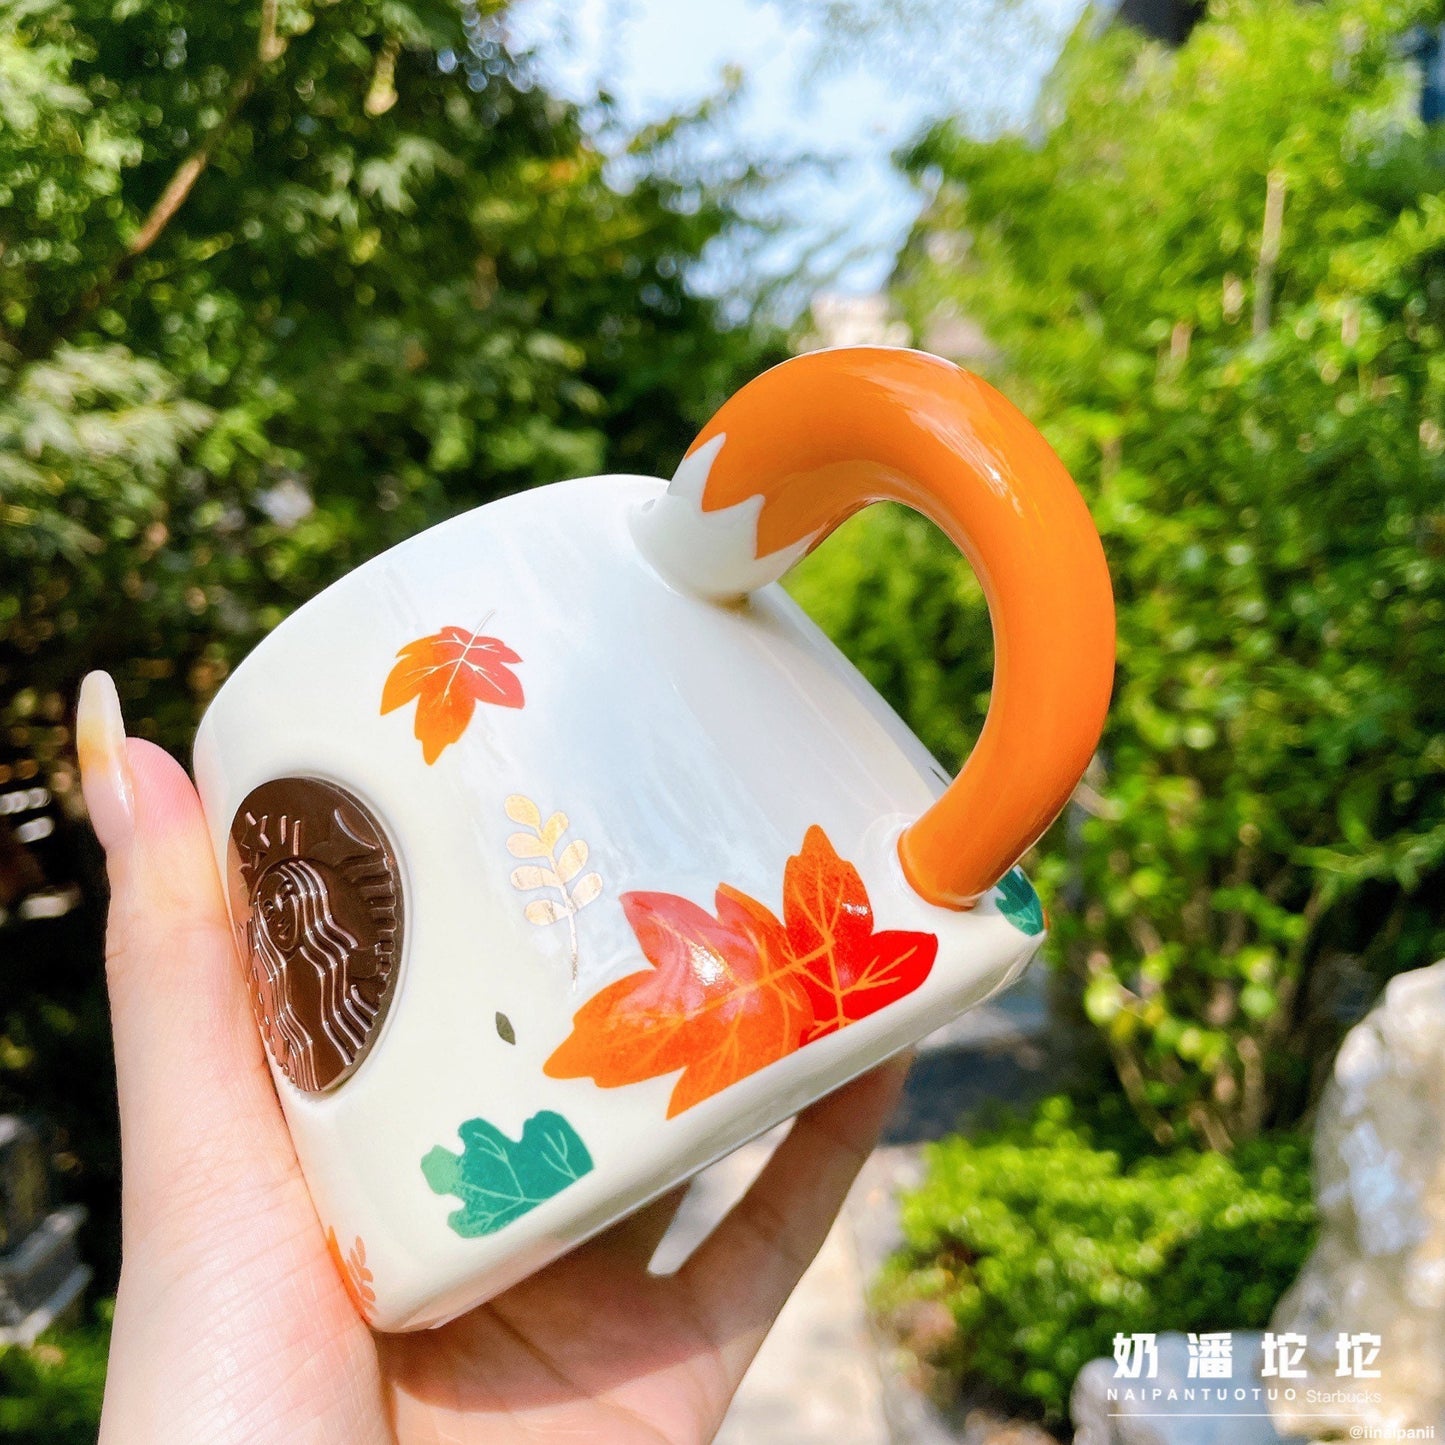 Starbucks China 300ml 2021 autumn forest maple leaves with fox ceramics mug